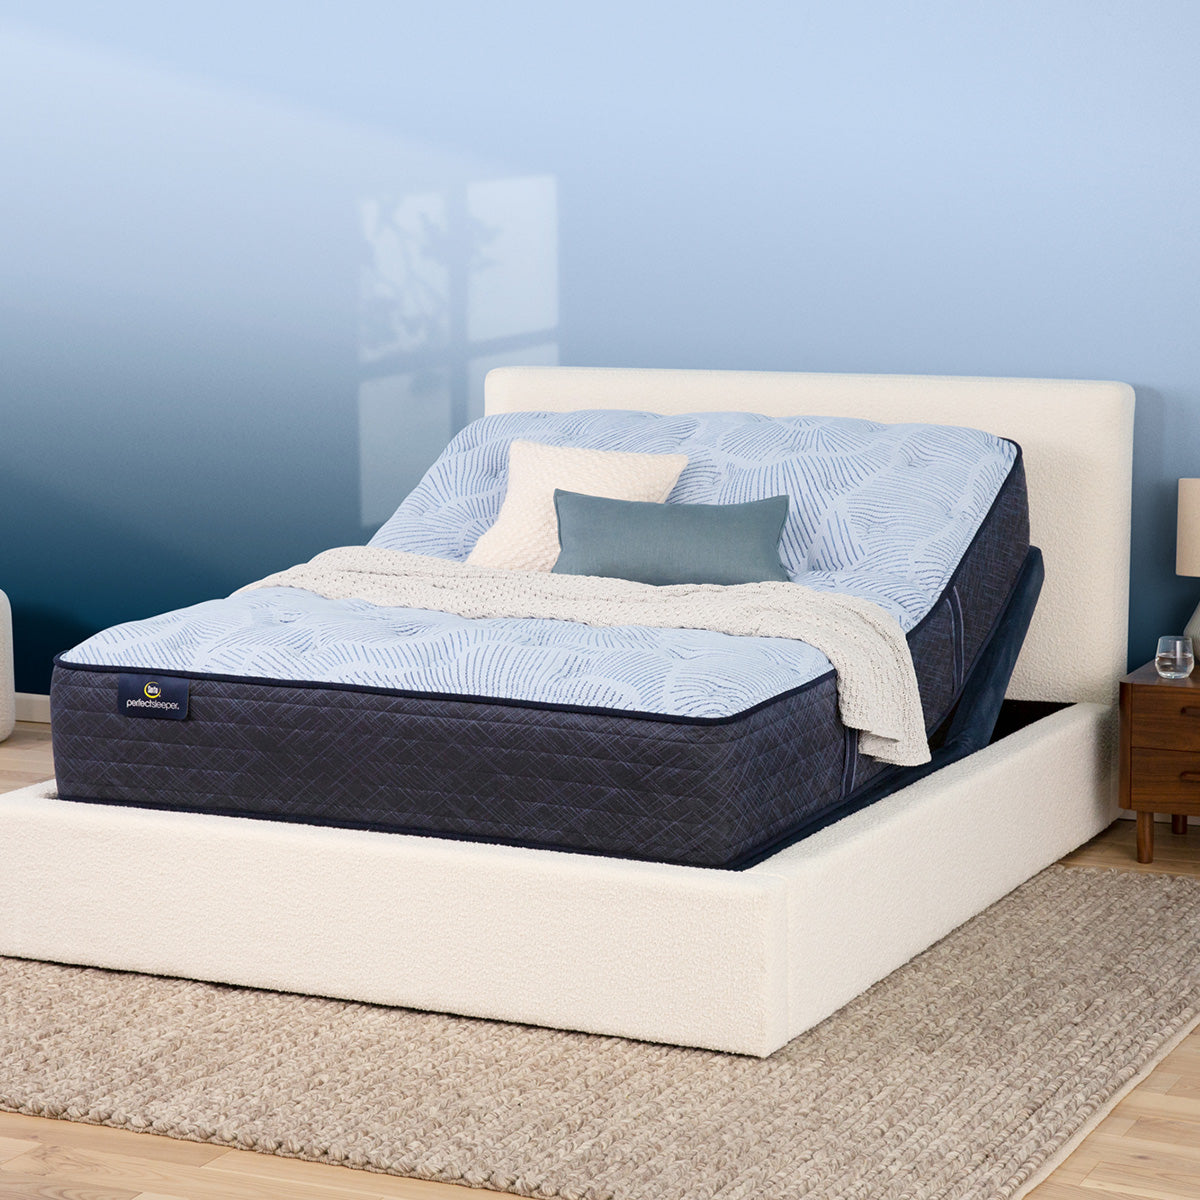 Serta Motion Essentials Adjustable Base with mattress on top